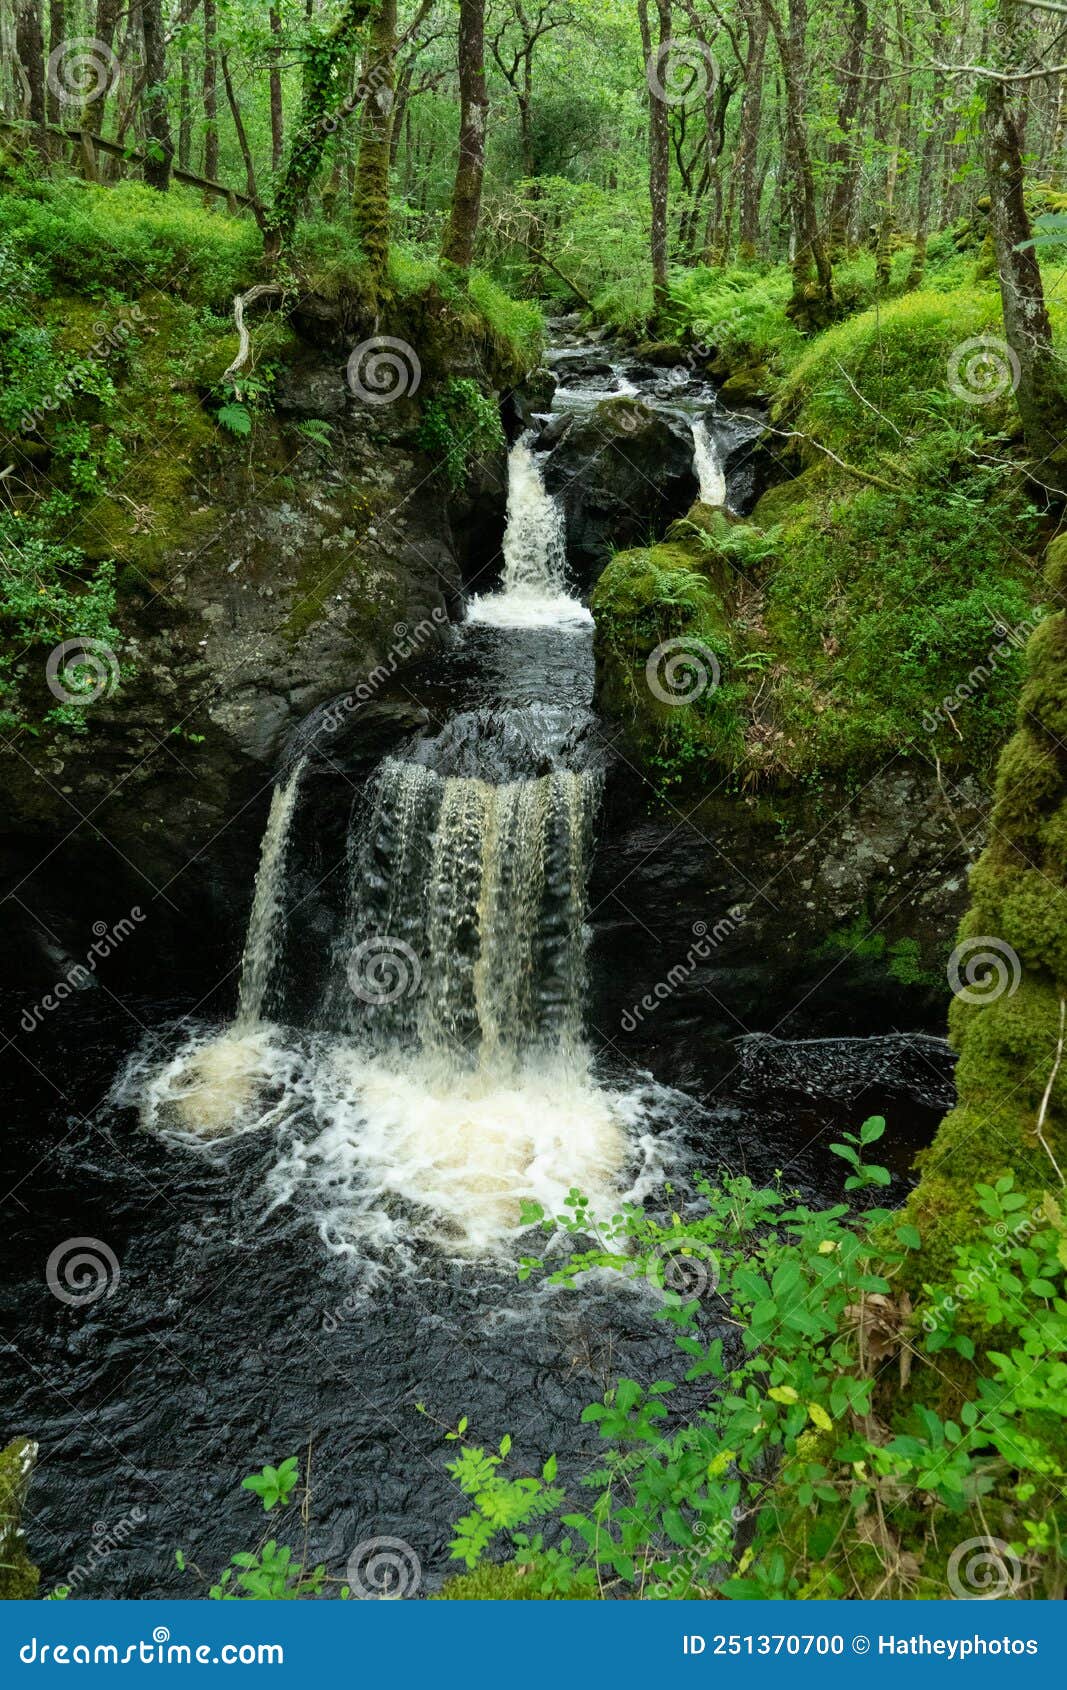 waterfall in wood of cree, newtown stewart, dumfries & galloway scotland